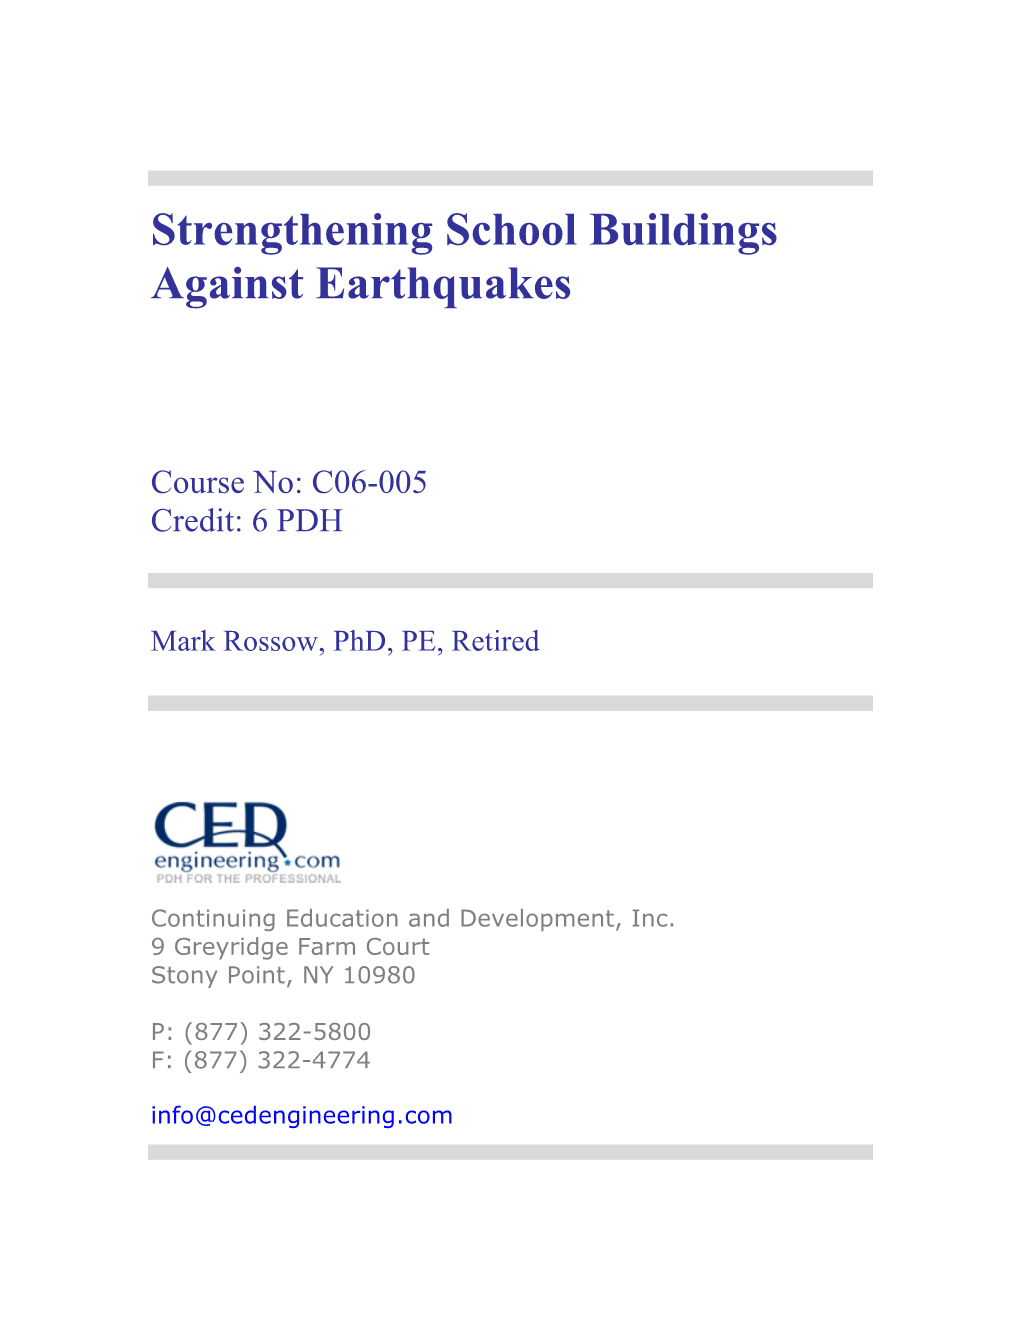 Strengthening School Buildings Against Earthquakes